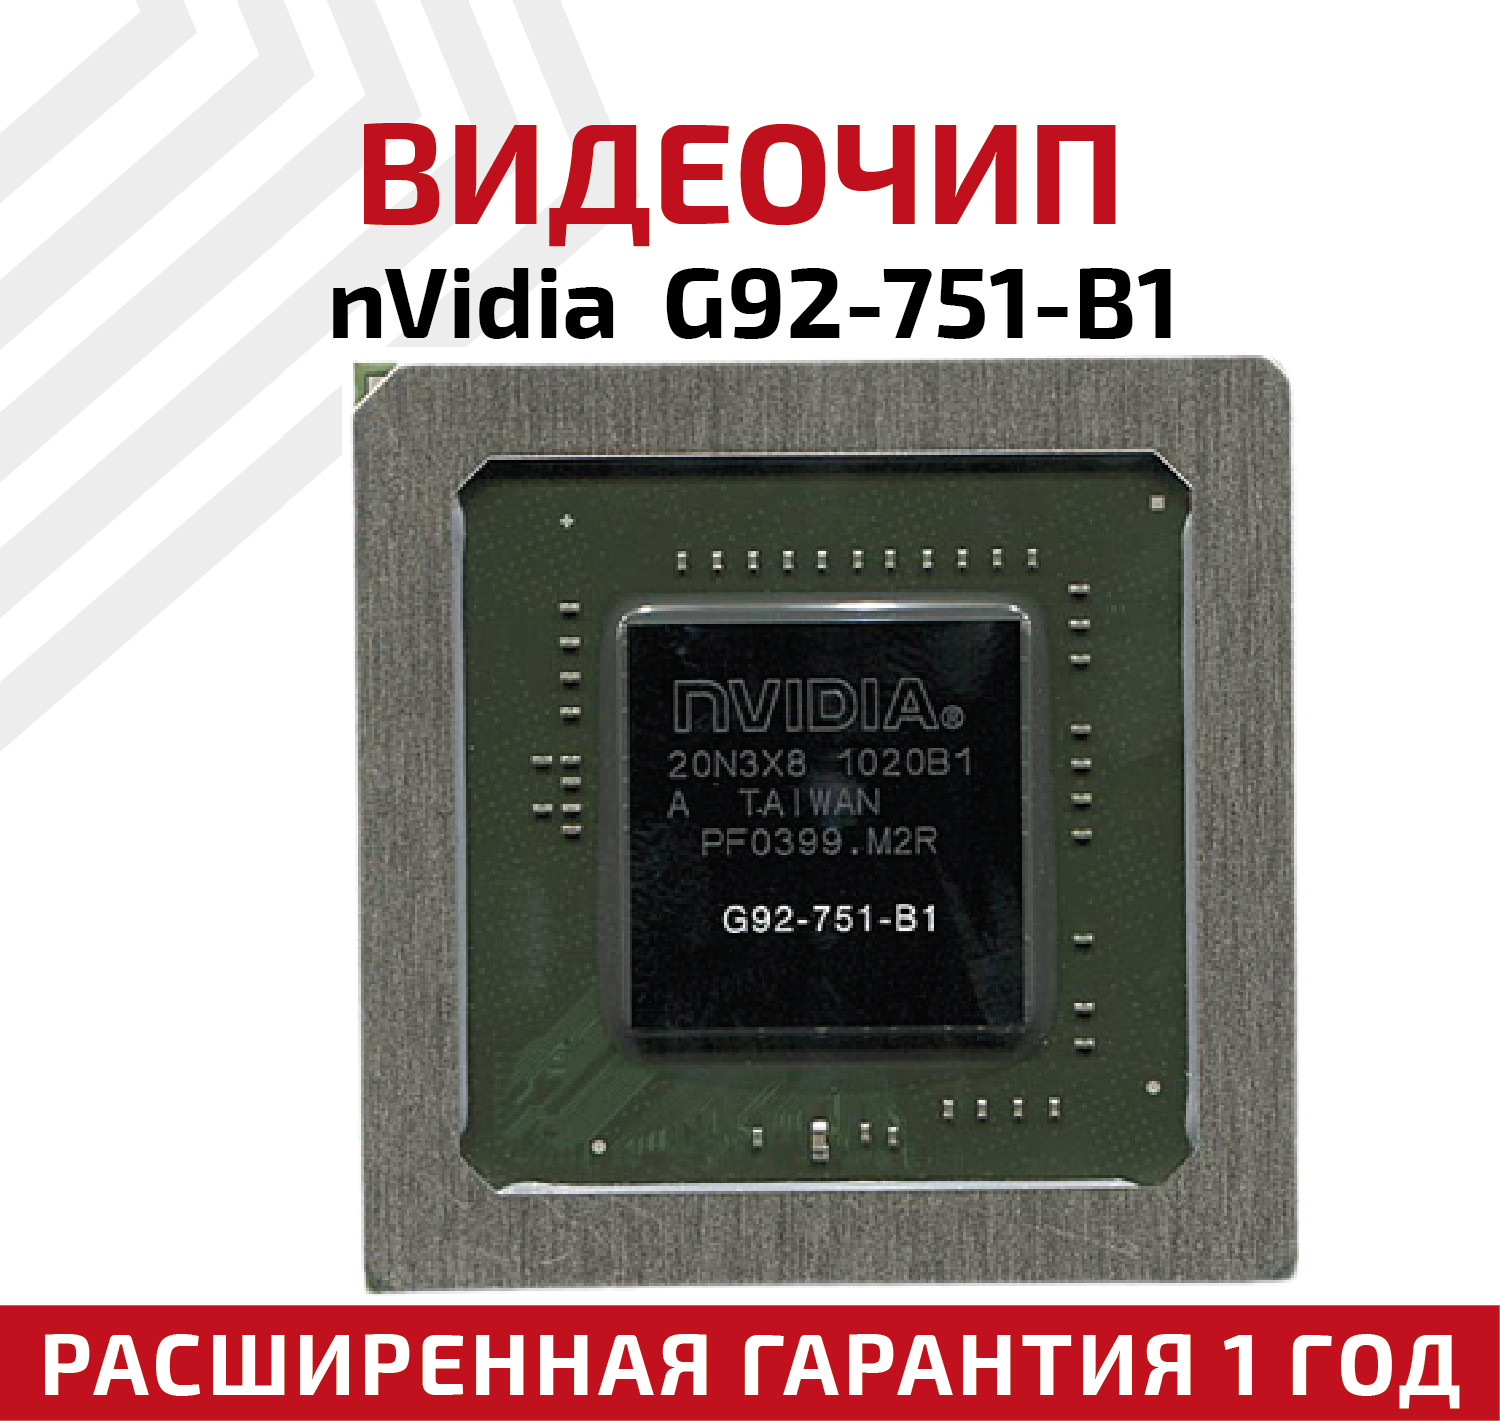 Видеочип nVidia G92-751-B1